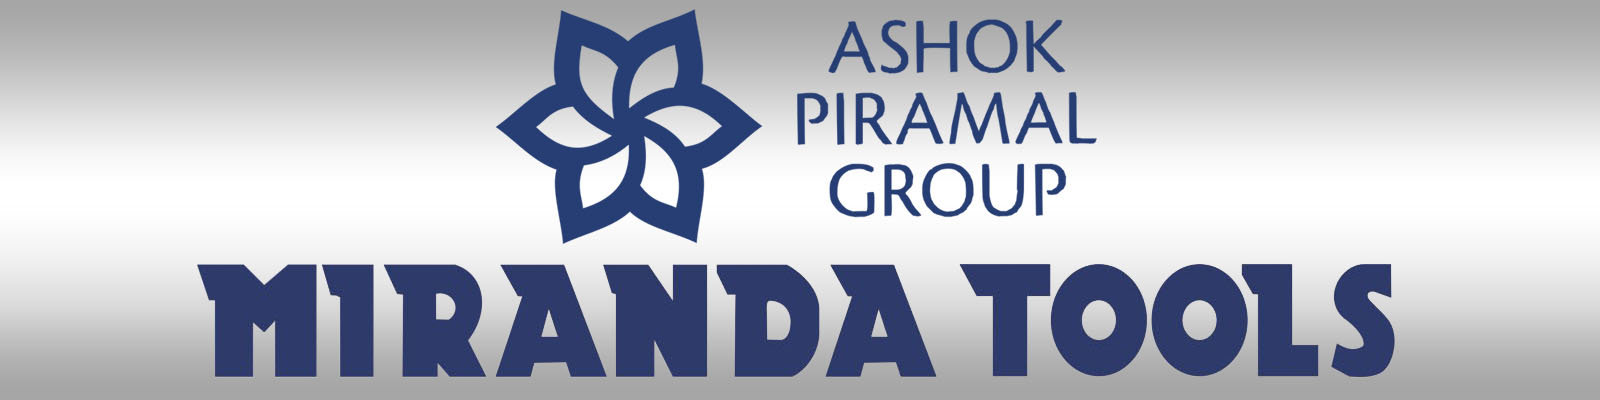 miranda tools logo